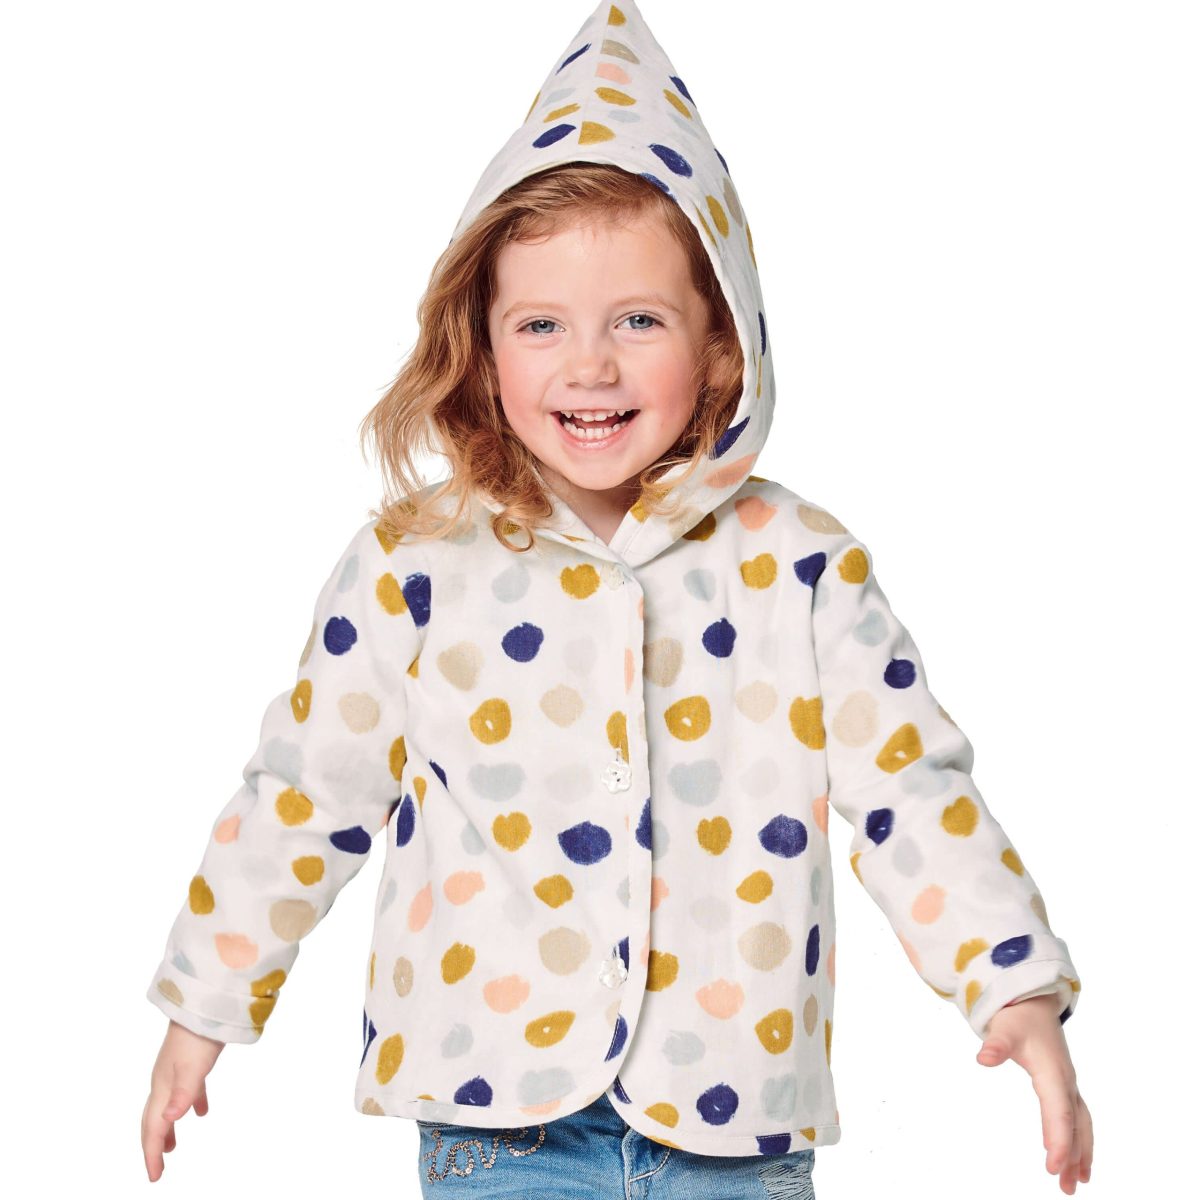 Burda Style Pattern 9289 Children's Coat or Jacket with Hood